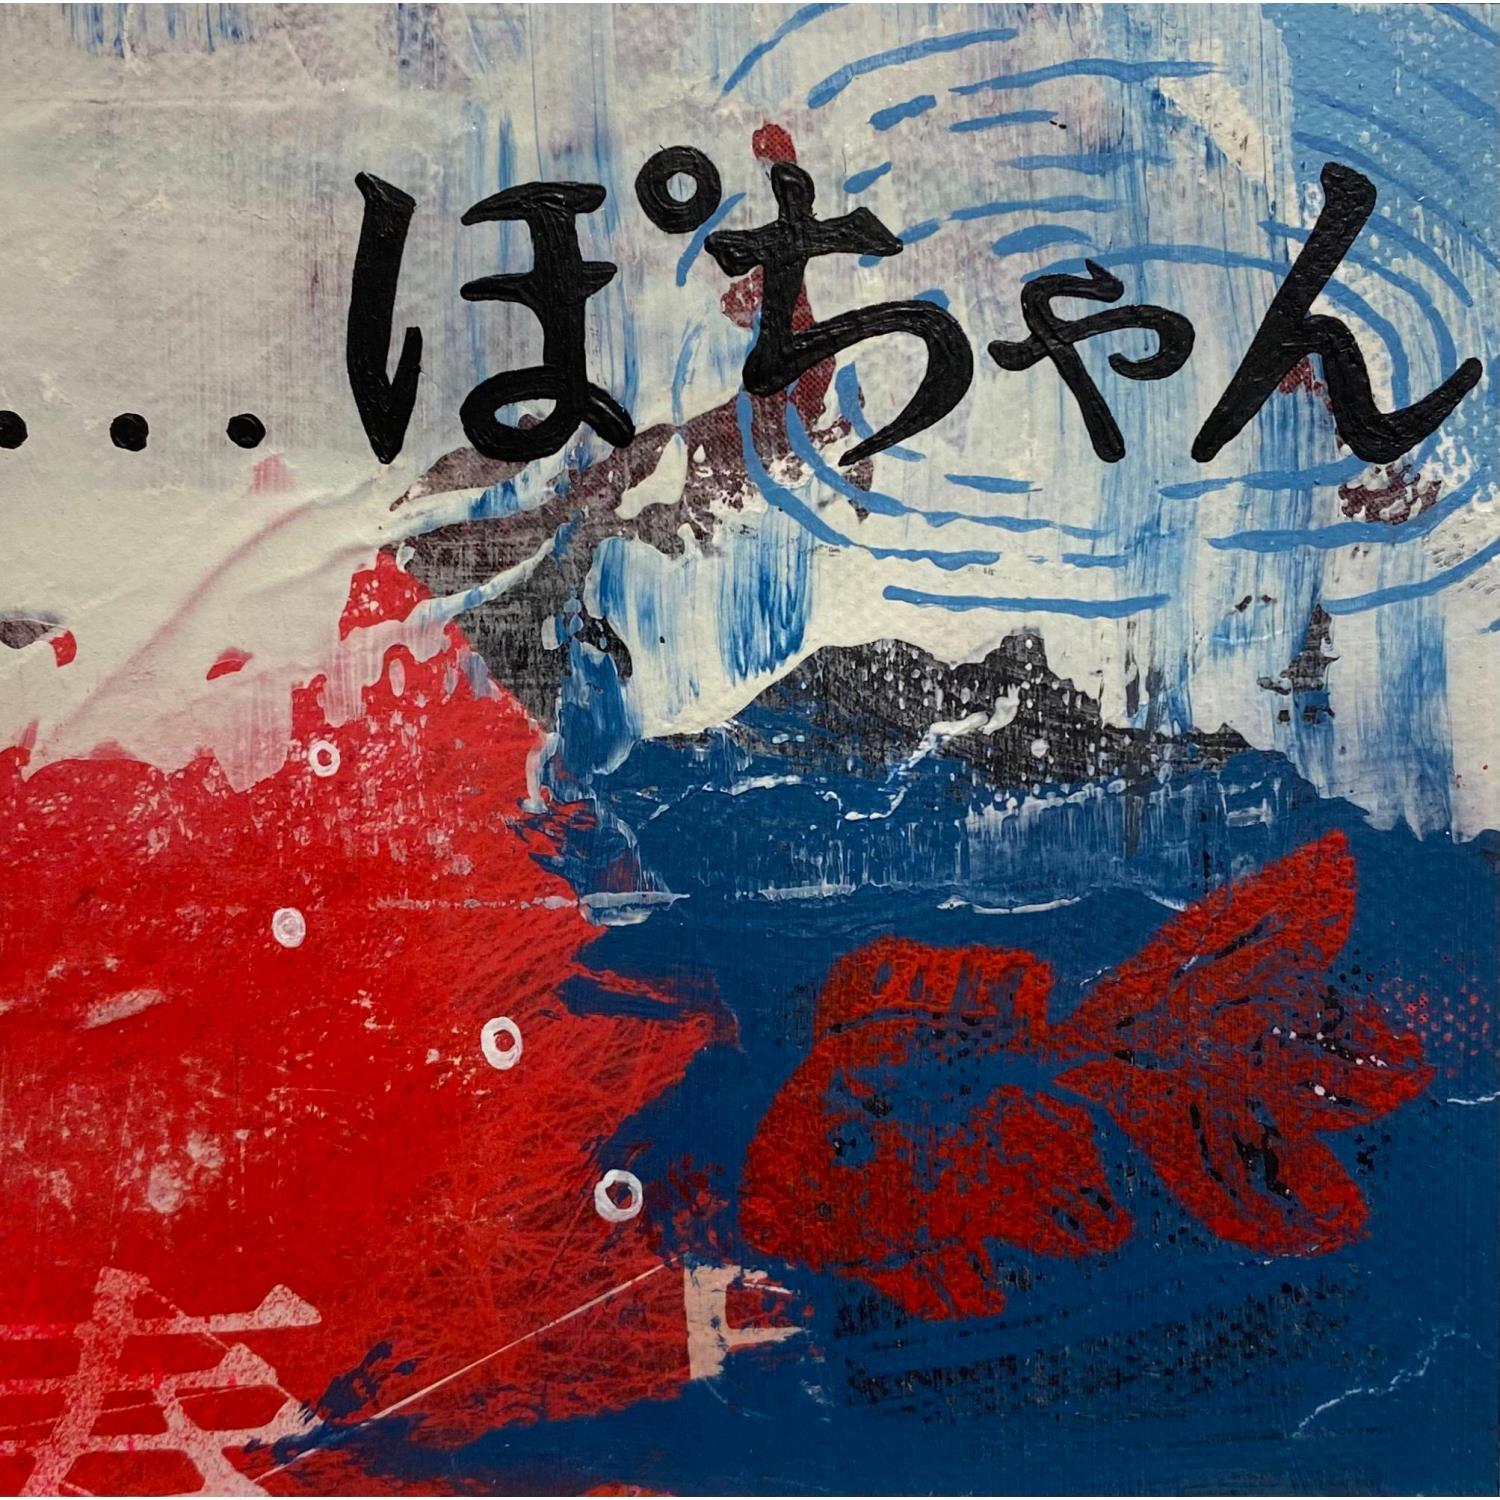 Japanese Contemporary Art & Japanese Pop Art